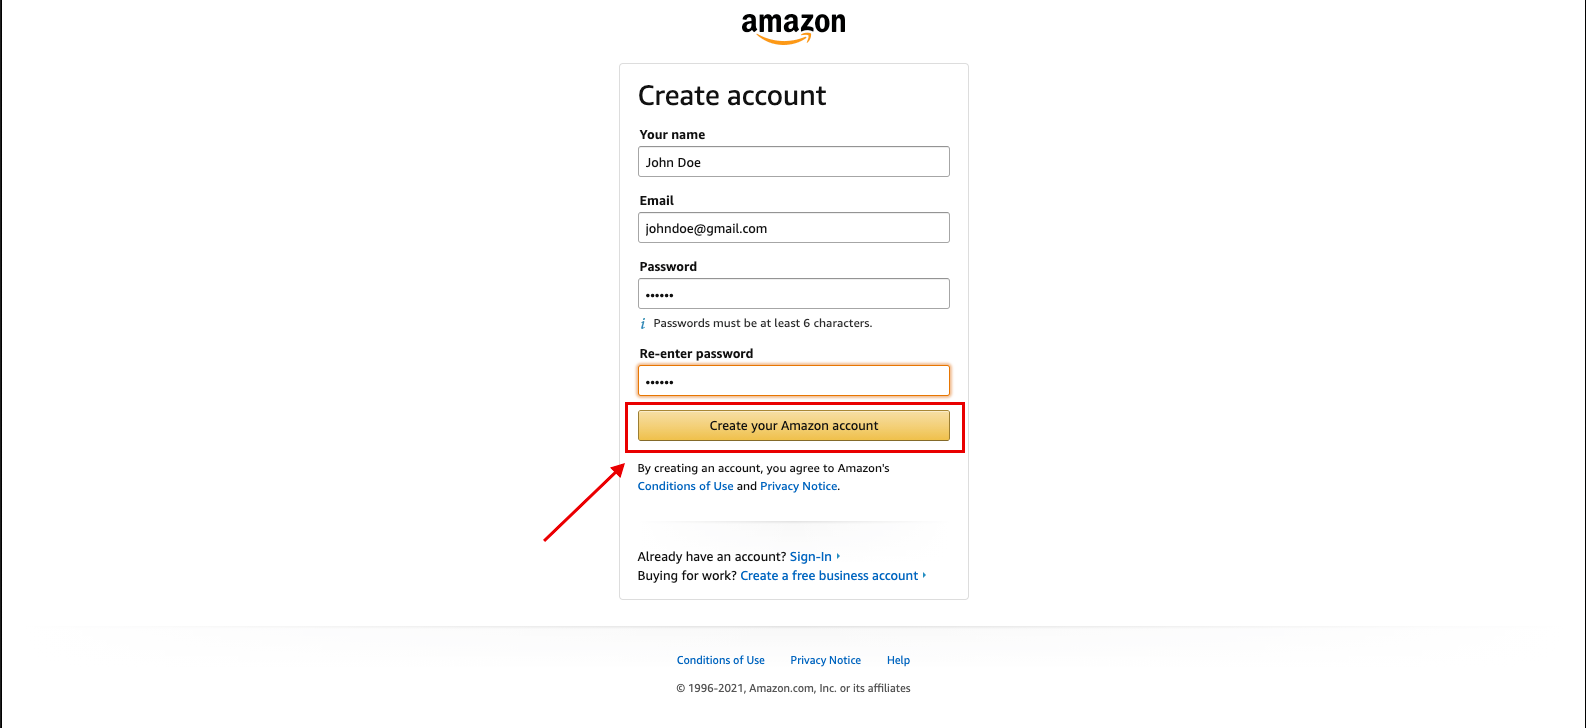 Create Amazon Account